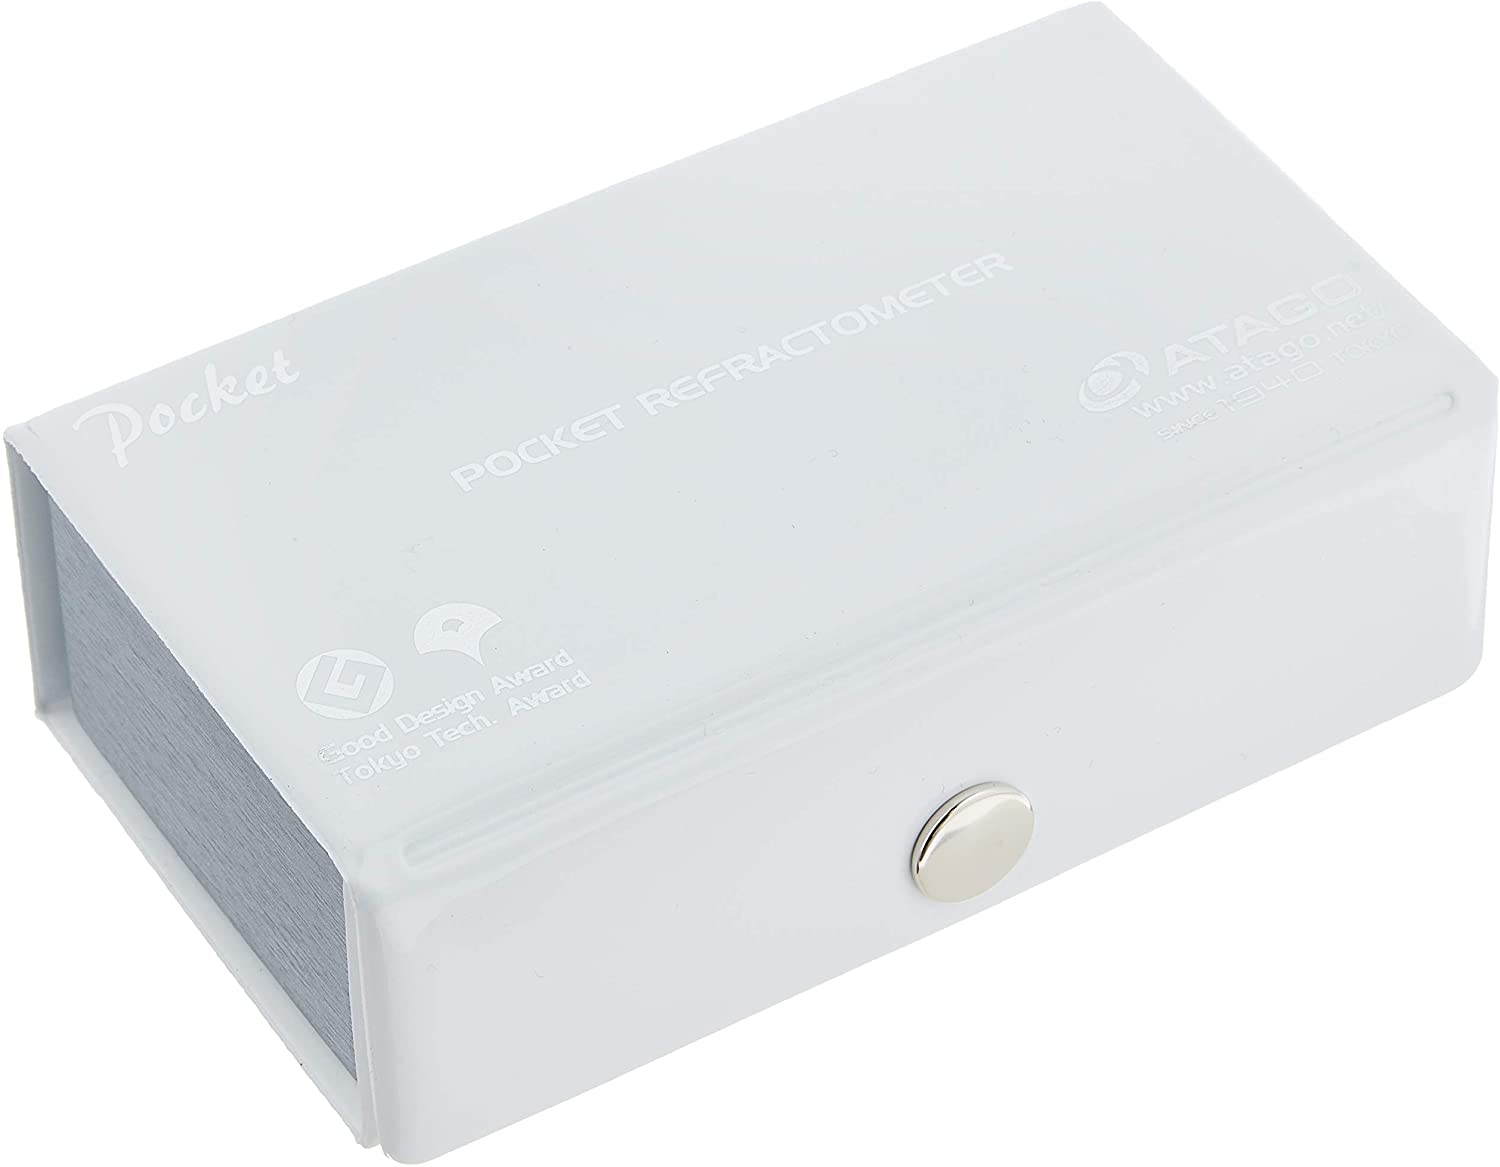 Atago 4410 Digital Pocket Urine Specific Gravity Refractometer, PAL-10S PAL Series, Urine Specific Gravity : 1.000 to 1.060 Measurement Range